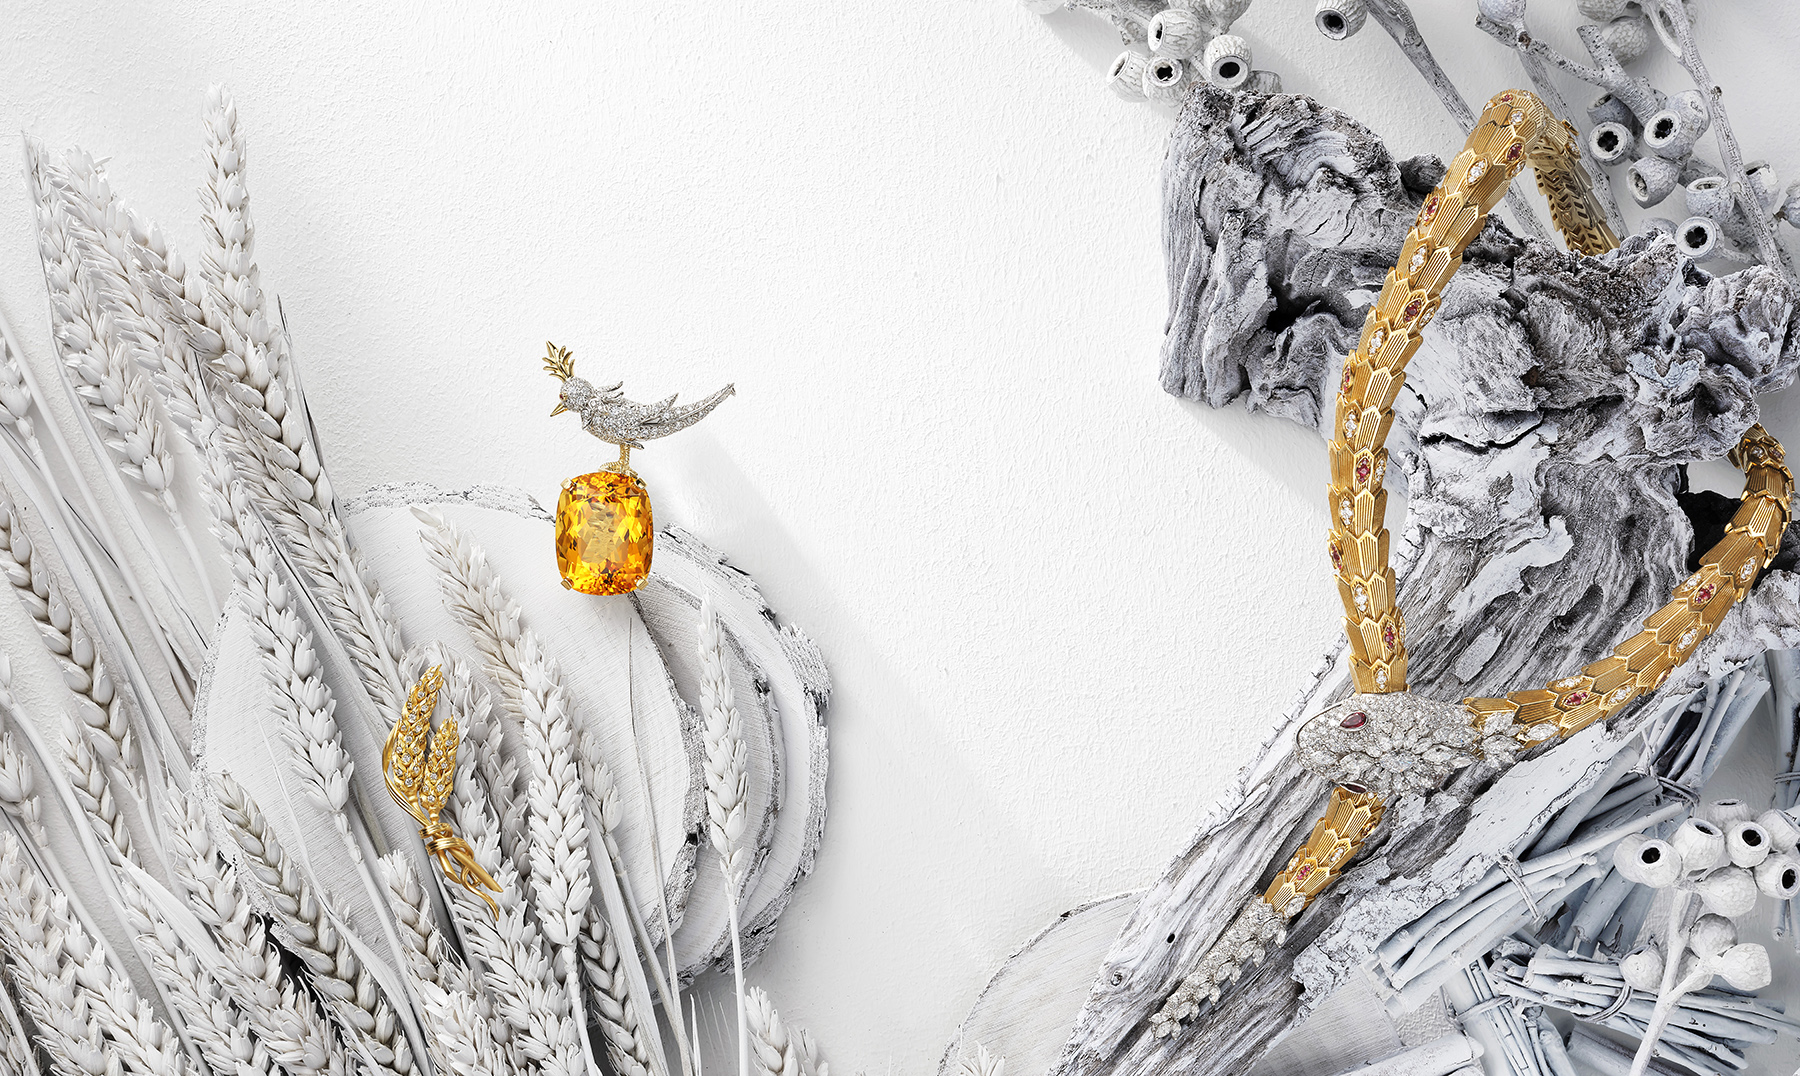 Chaumet L'Épi de Blé de Chaumet 18K 黃金鑲鑽胸針。 Tiffany & Co. Schlumberger 高級珠寶系列 18K 金與鉑金黃水晶石上鳥胸針。 Bvlgari Serpenti 系列頂級白 K 金與黃 K 金紅寶石和鑽石項鍊。